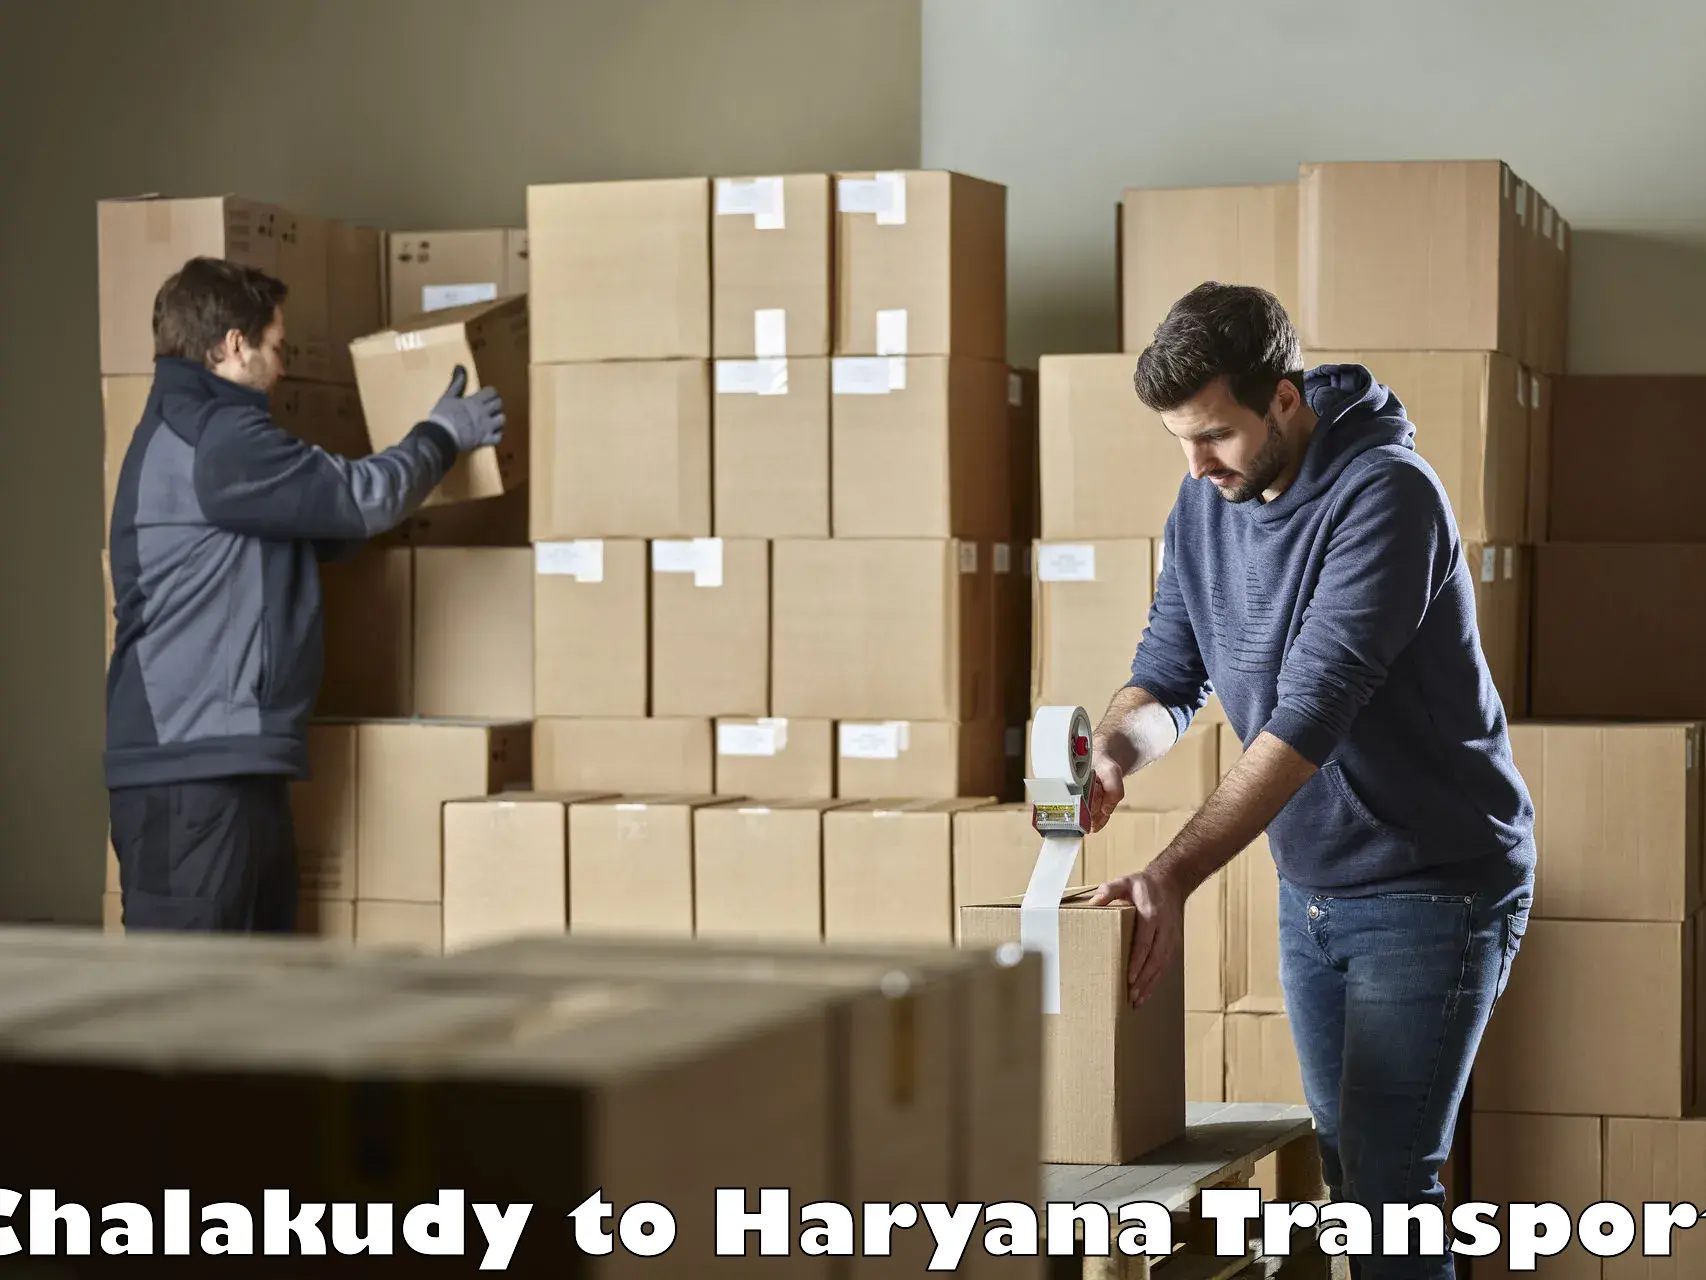 Furniture transport service Chalakudy to Gurugram